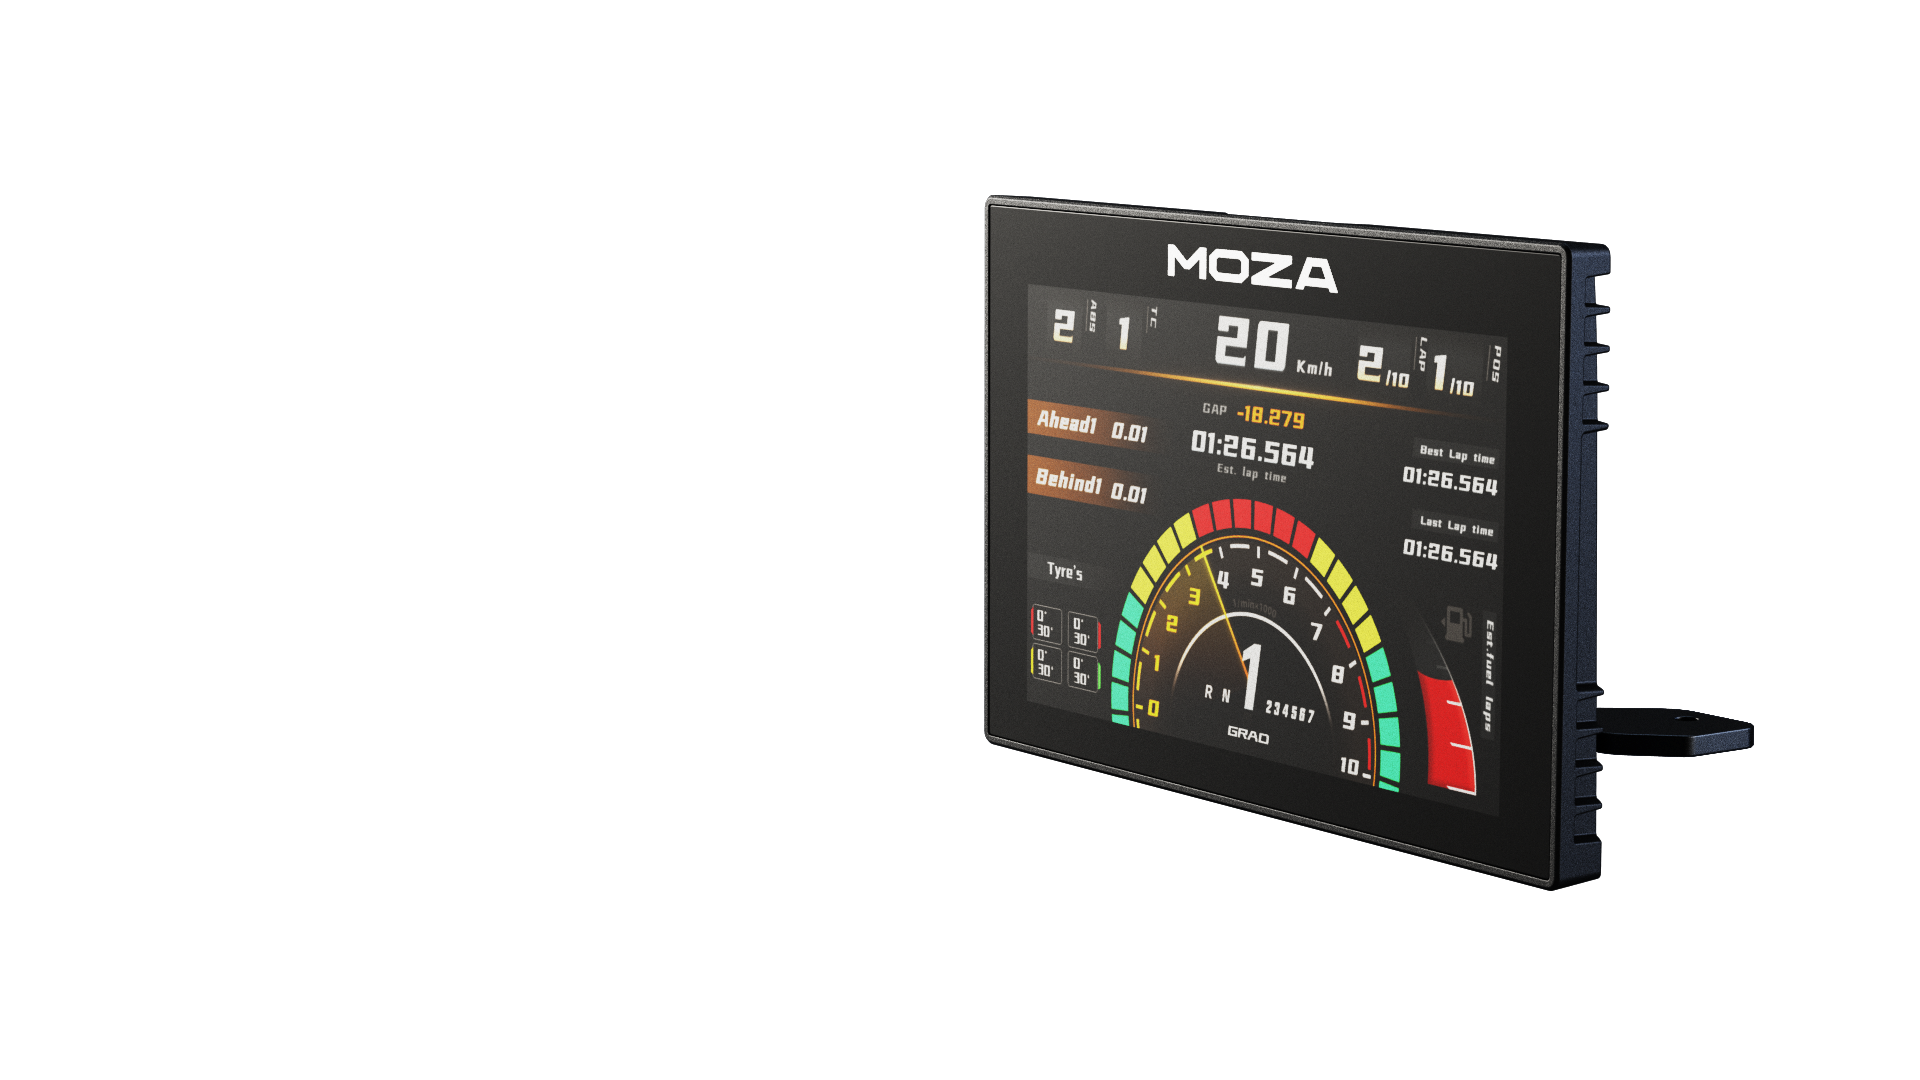 Moza Racing CM Racing Dash HD for R9 DD-Base 